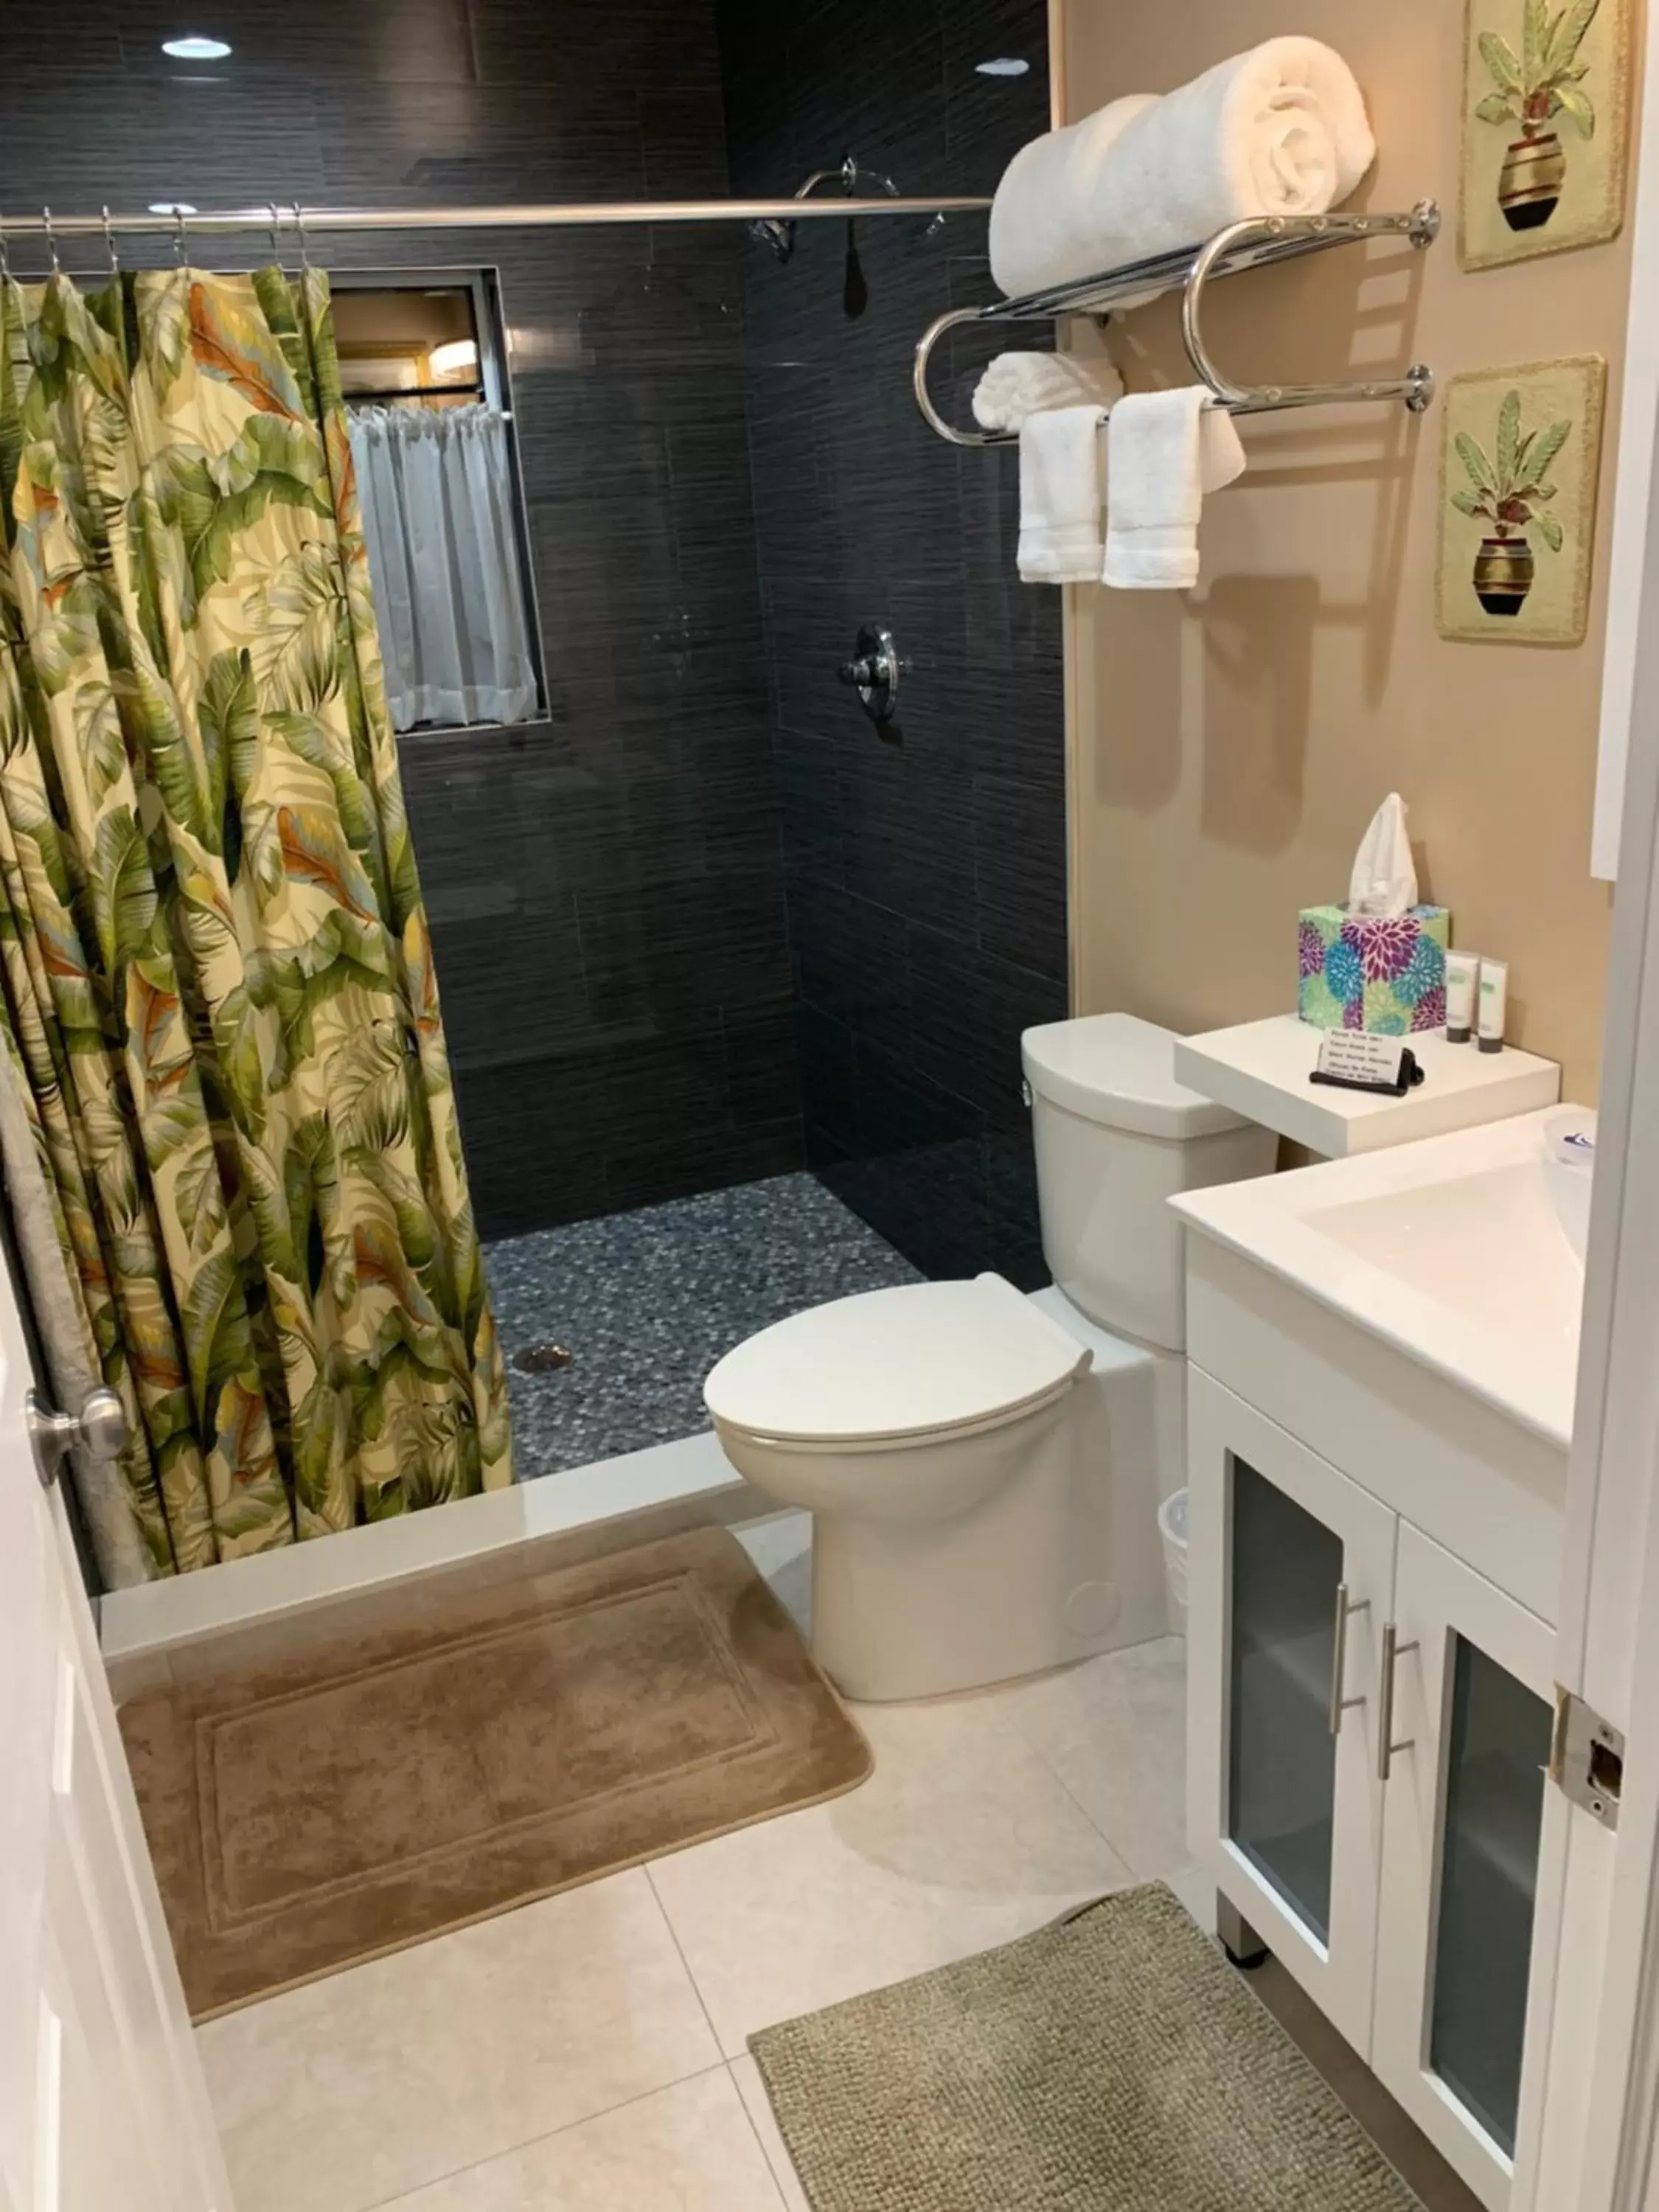 Bathroom in Fantasy Island Inn, Caters to Men